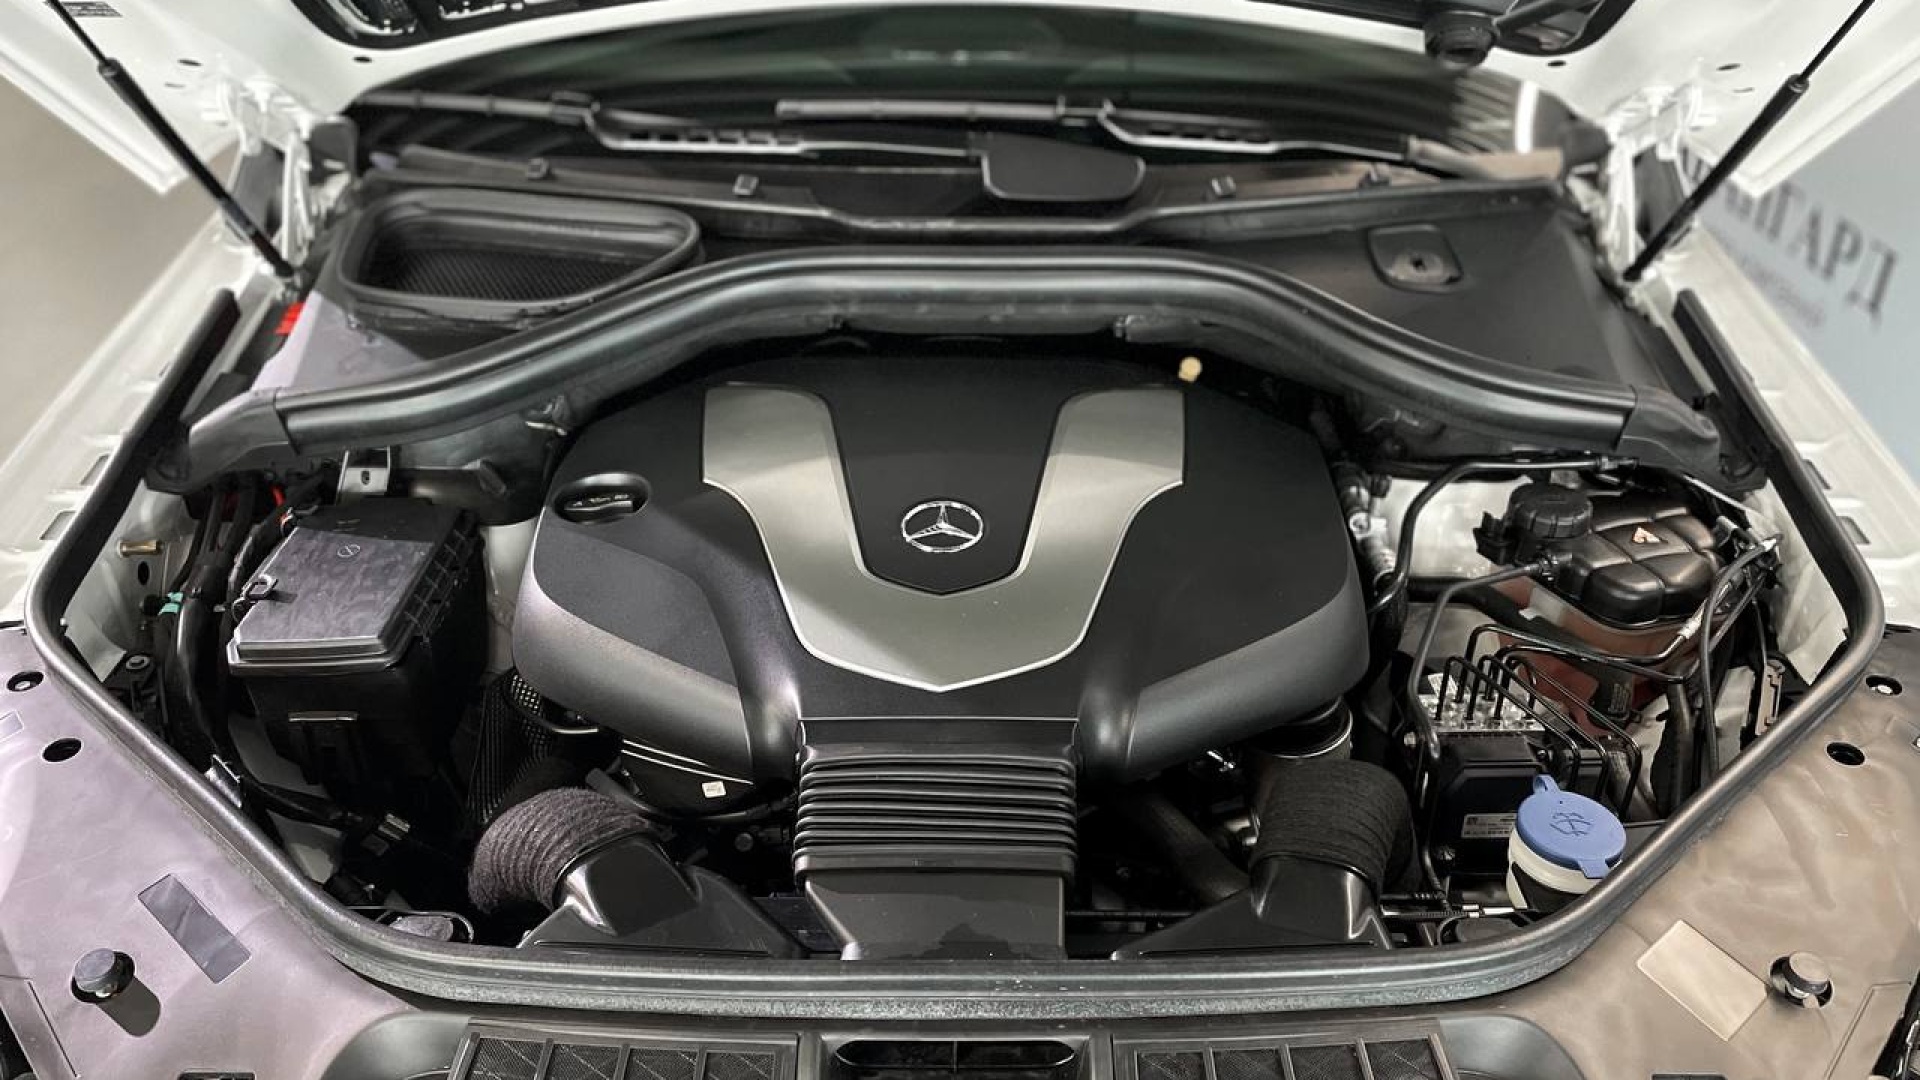 Mercedes-Benz GLE 350 d 4MATIC купе комплектация Limited Edition двигатель 3 литра (258 л.с.) Белый